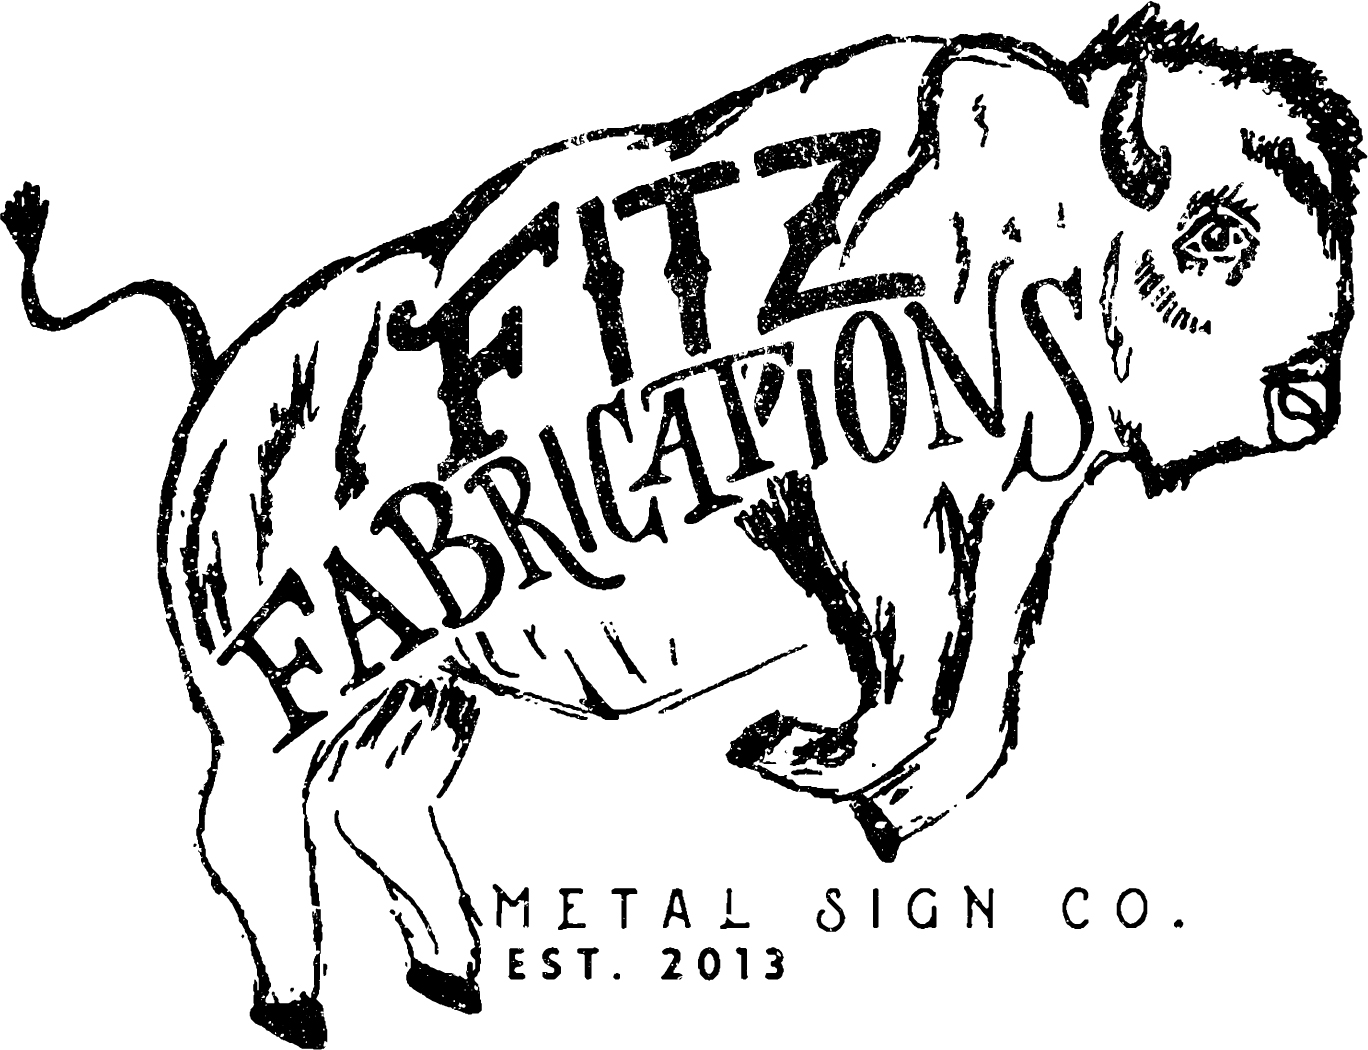 FITZ Fabrications